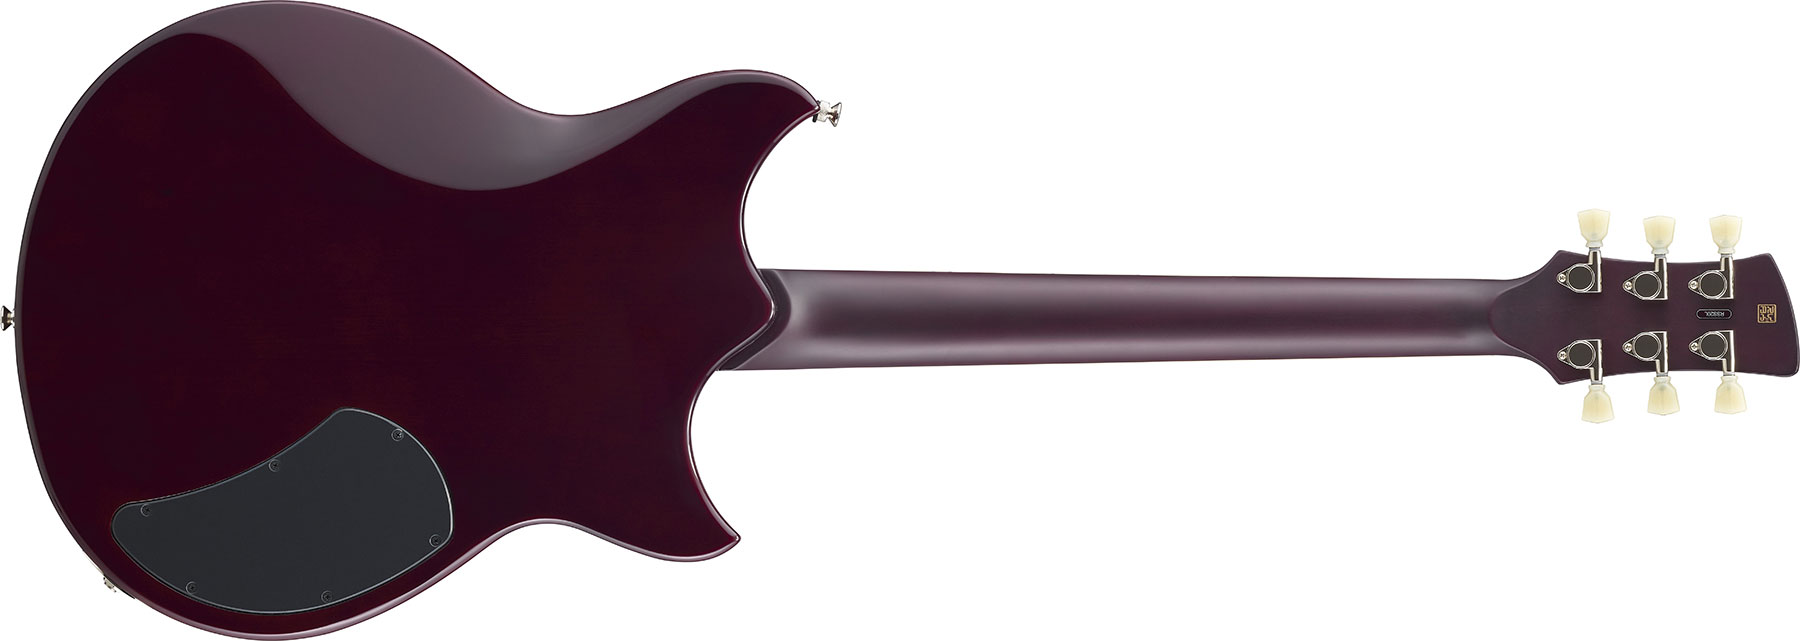 Yamaha Rss20l Revstar Standard Lh Gaucher Hh Ht Rw - Black - Linkshandige elektrische gitaar - Variation 2